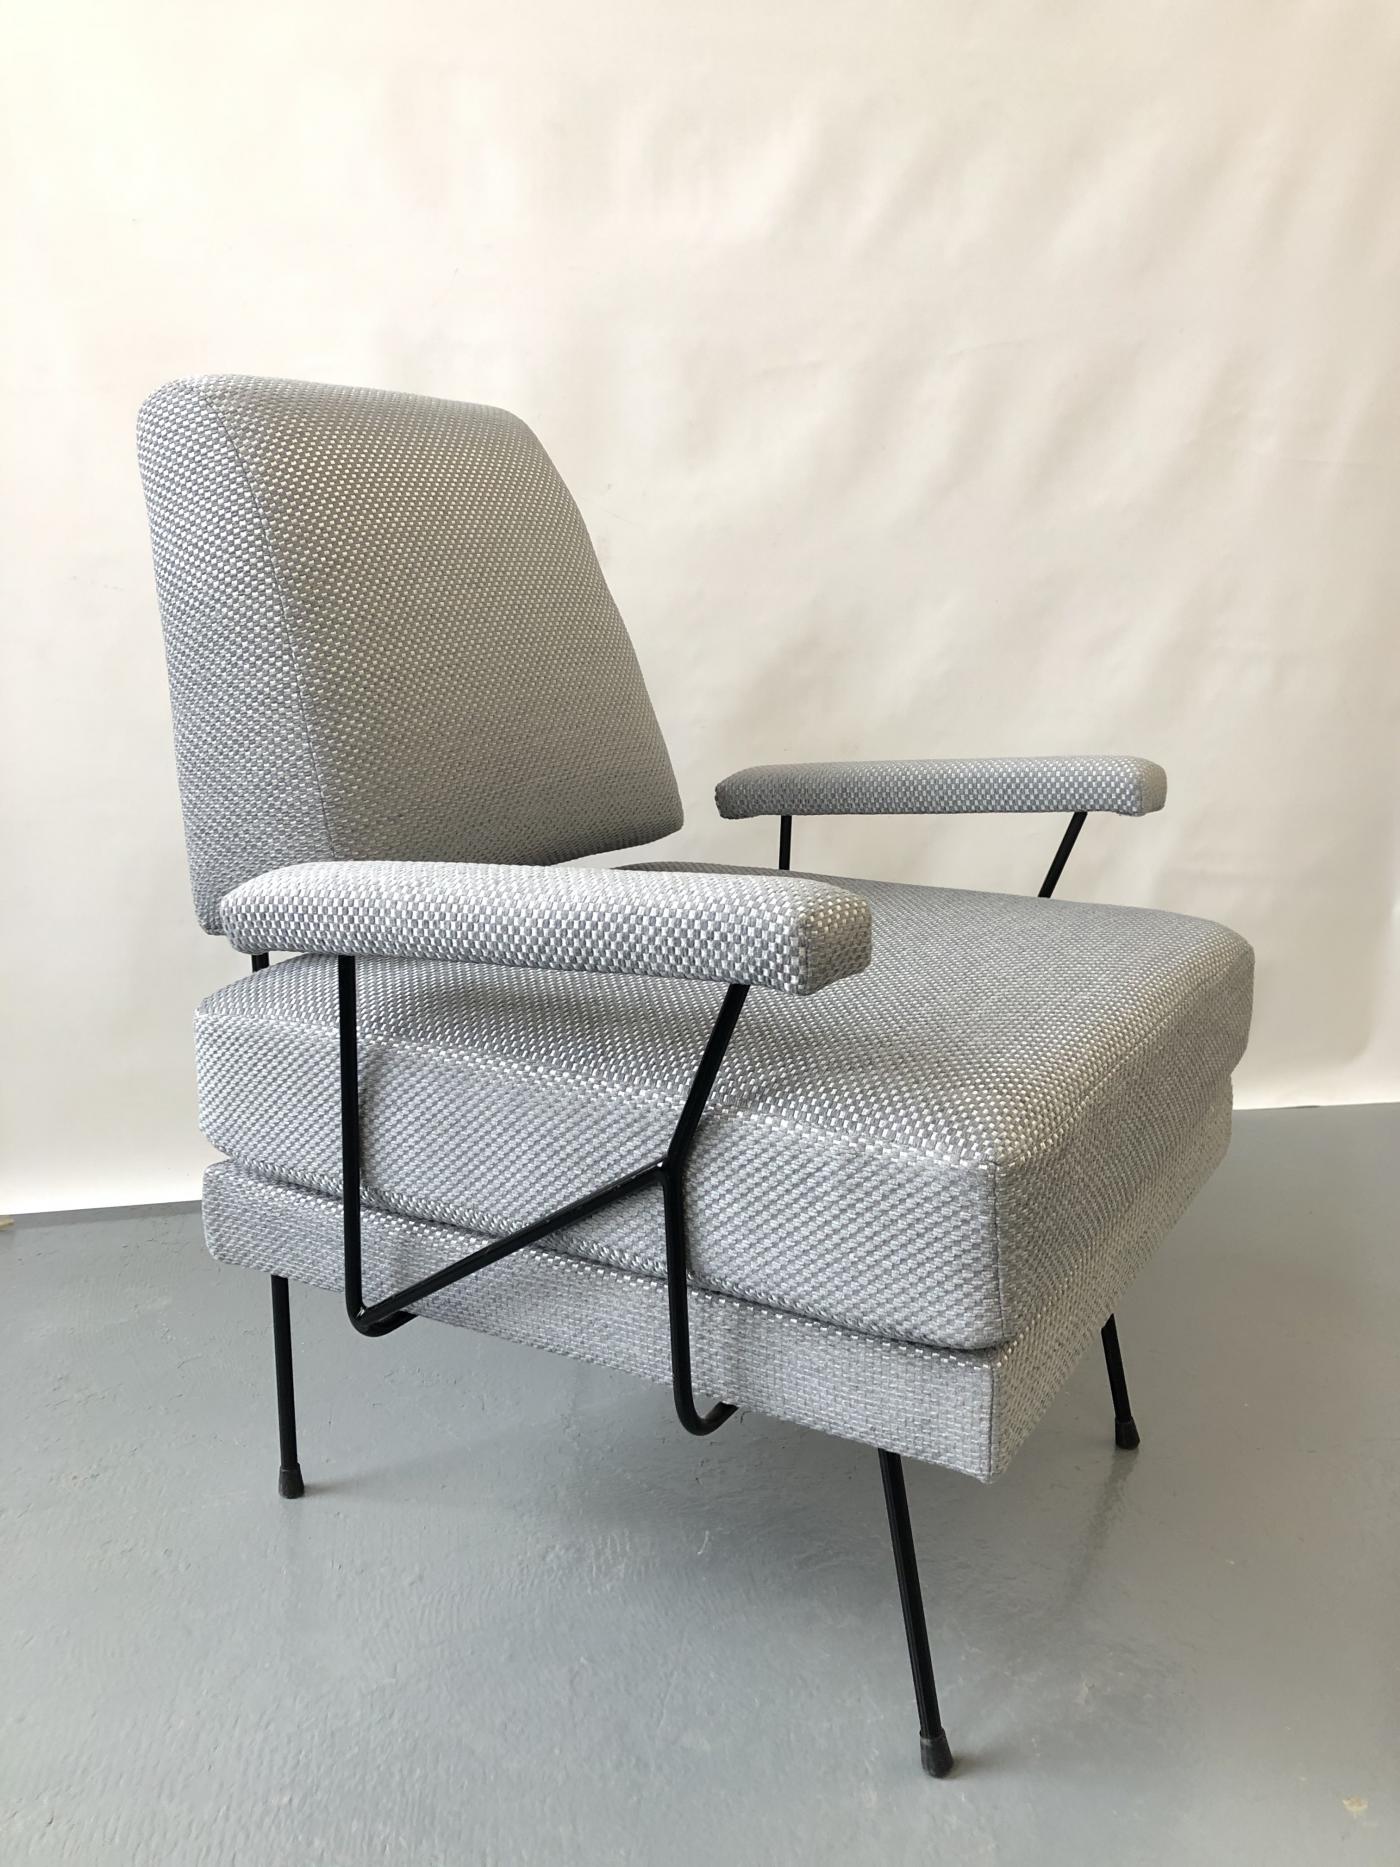 Pair of Mid Century Modern Iron Chairs.